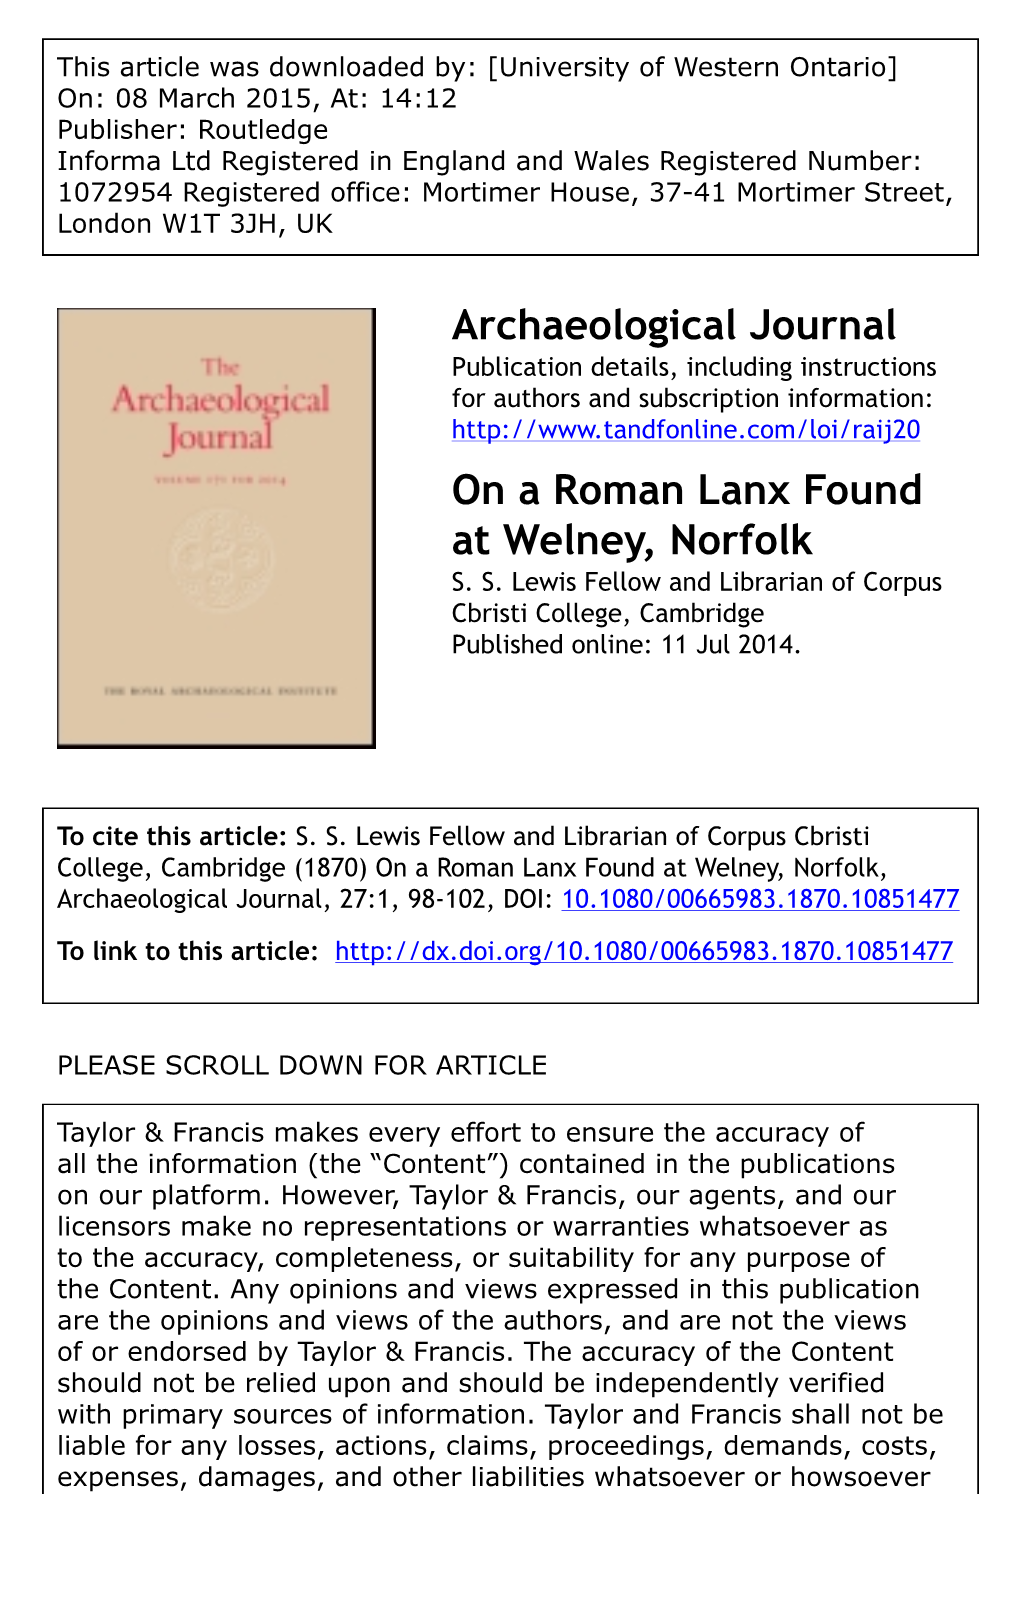 Archaeological Journal on a Roman Lanx Found at Welney, Norfolk